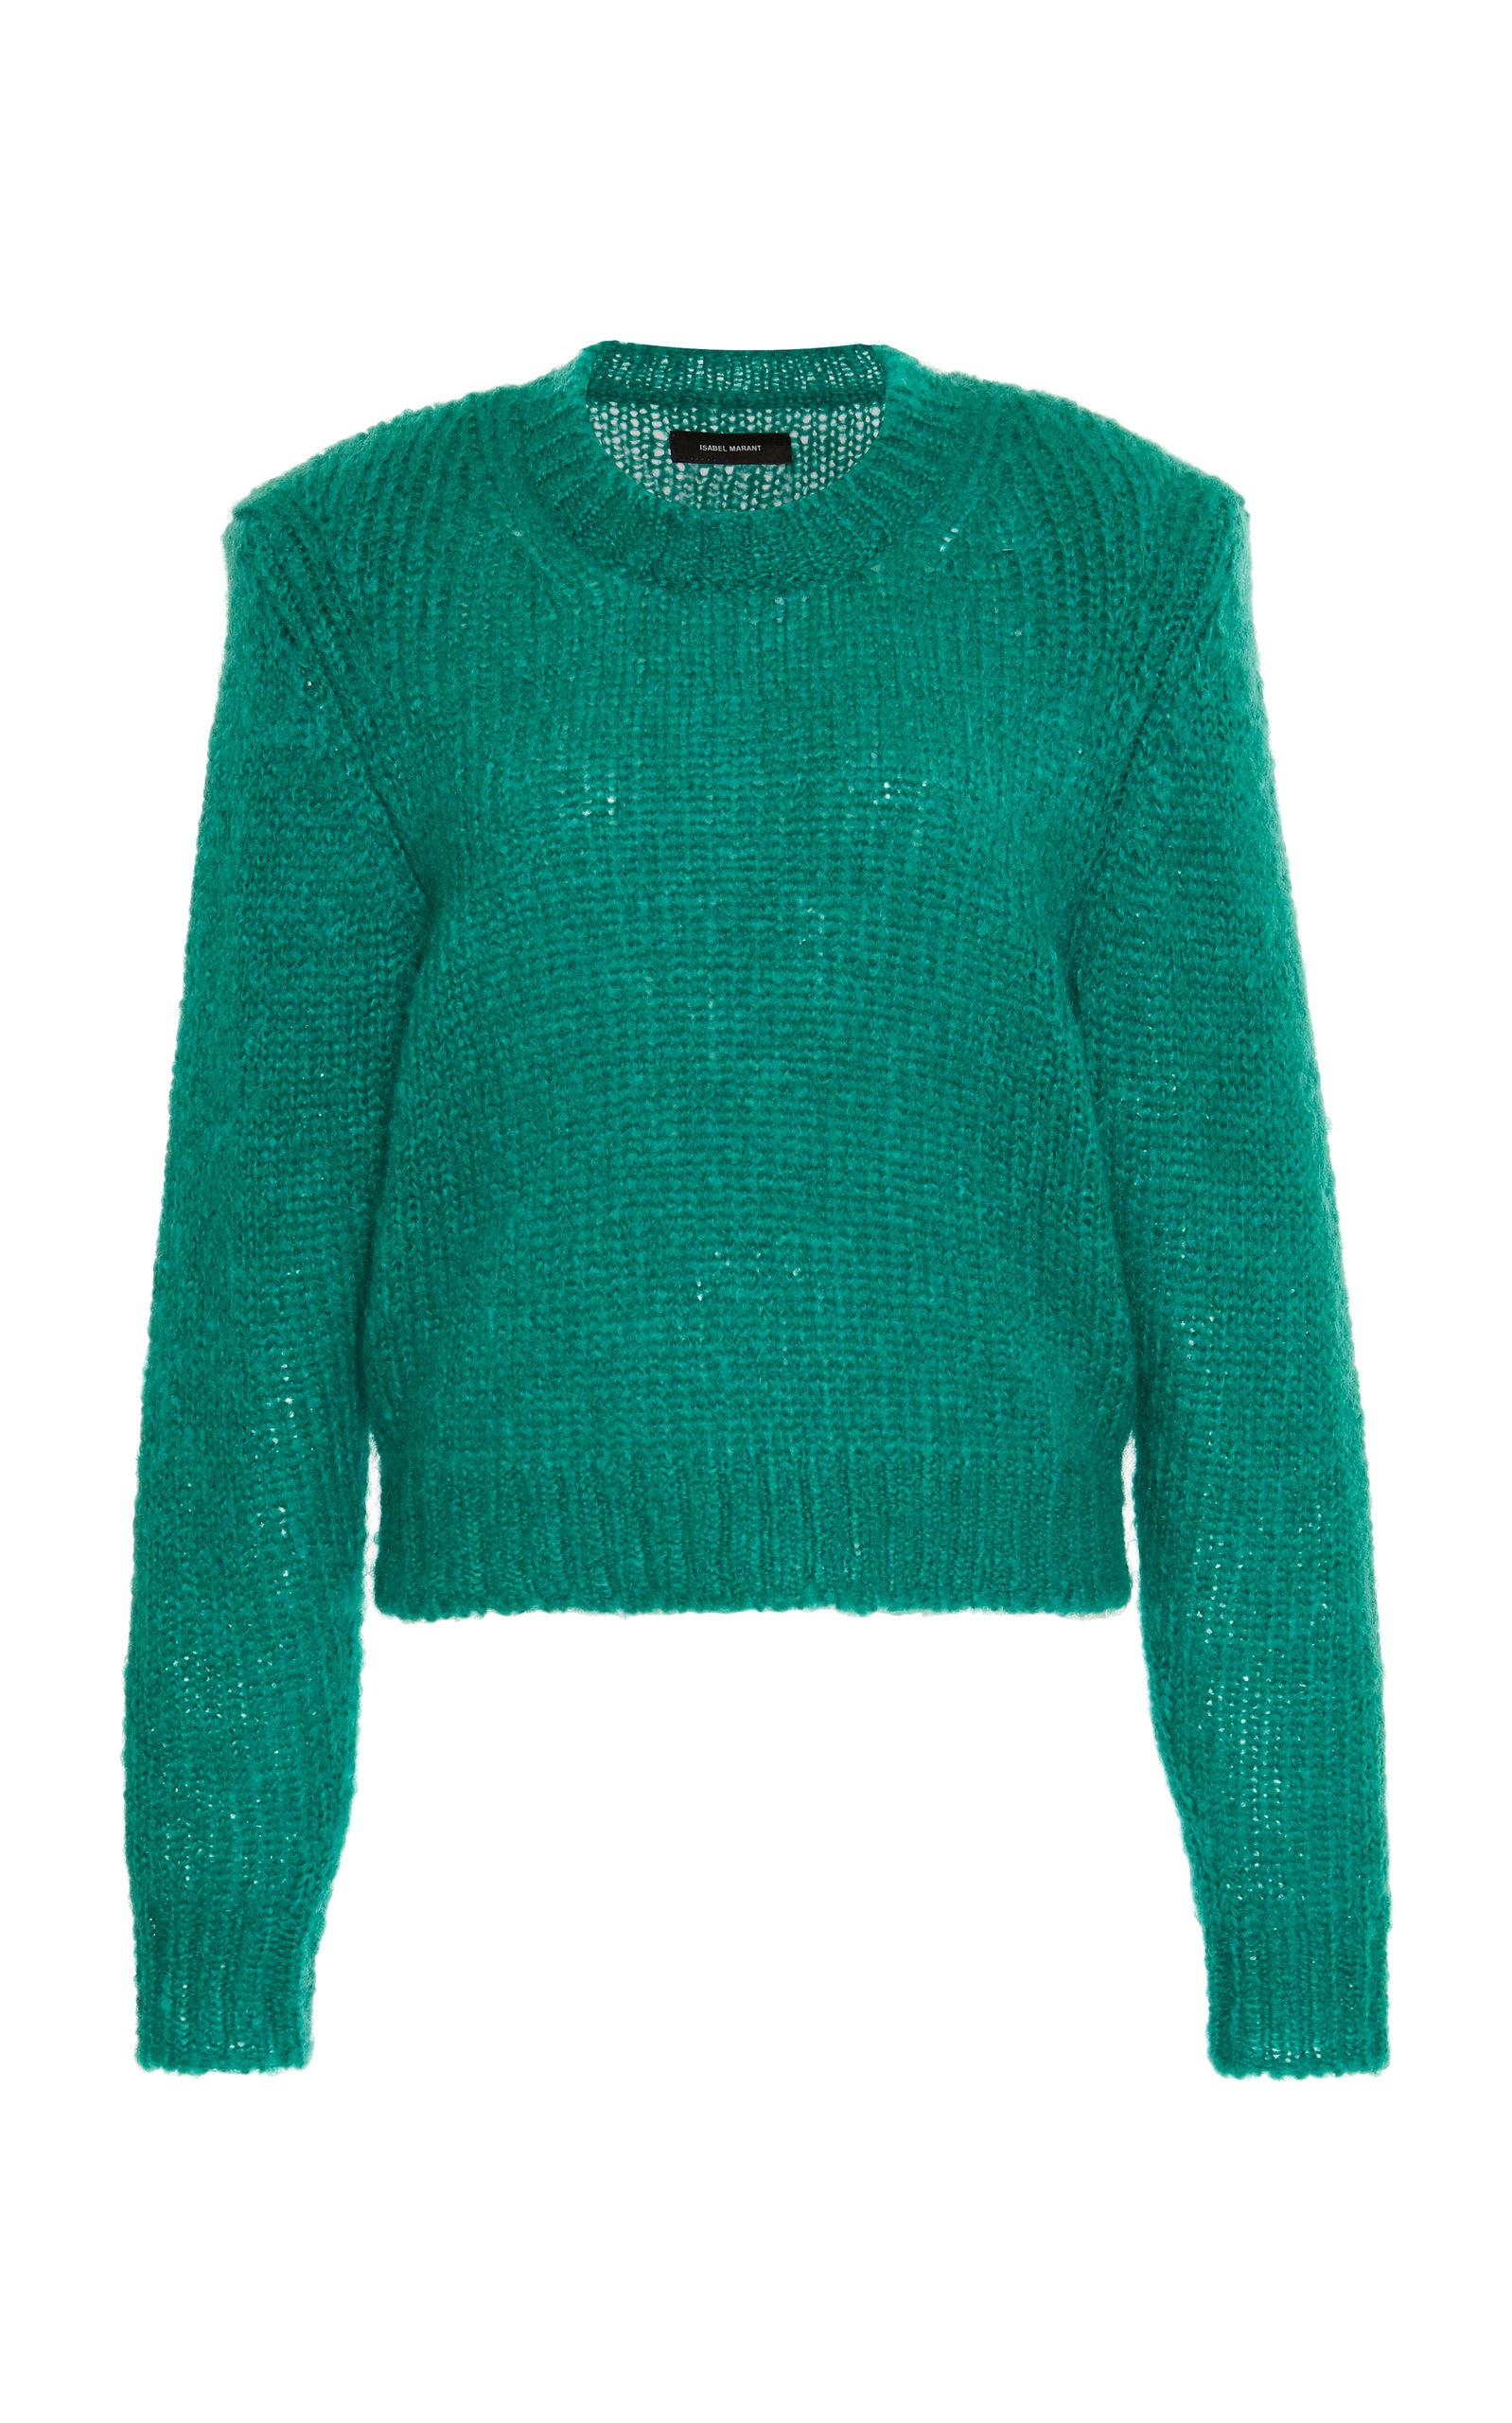 Isabel Marant Idona Mohair-blend Crewneck Sweater in Green - Lyst